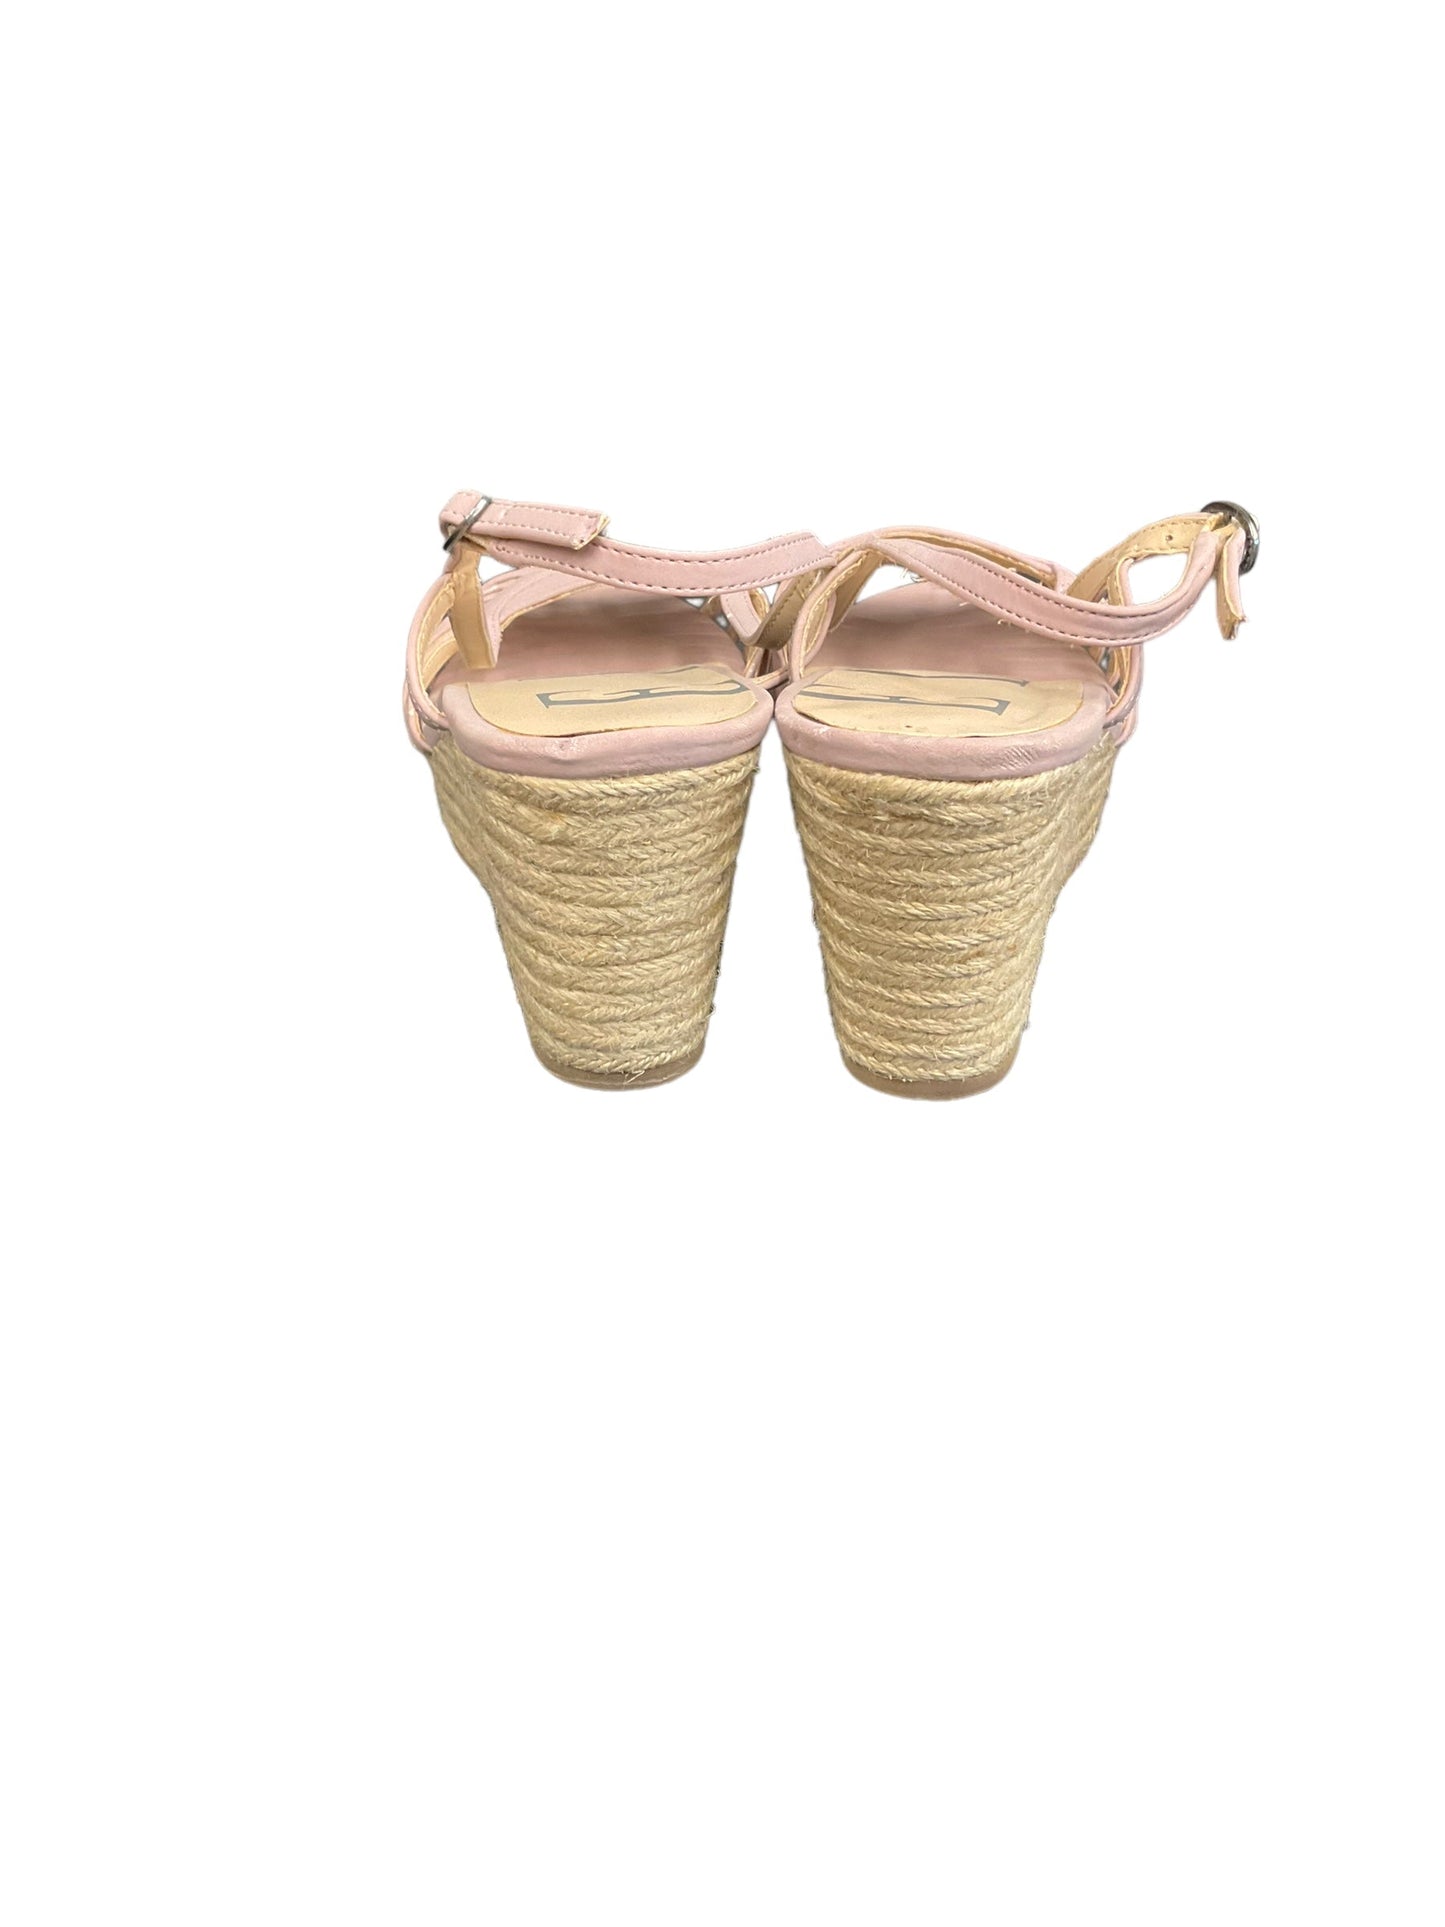 Sandals Heels Wedge By Elle  Size: 10